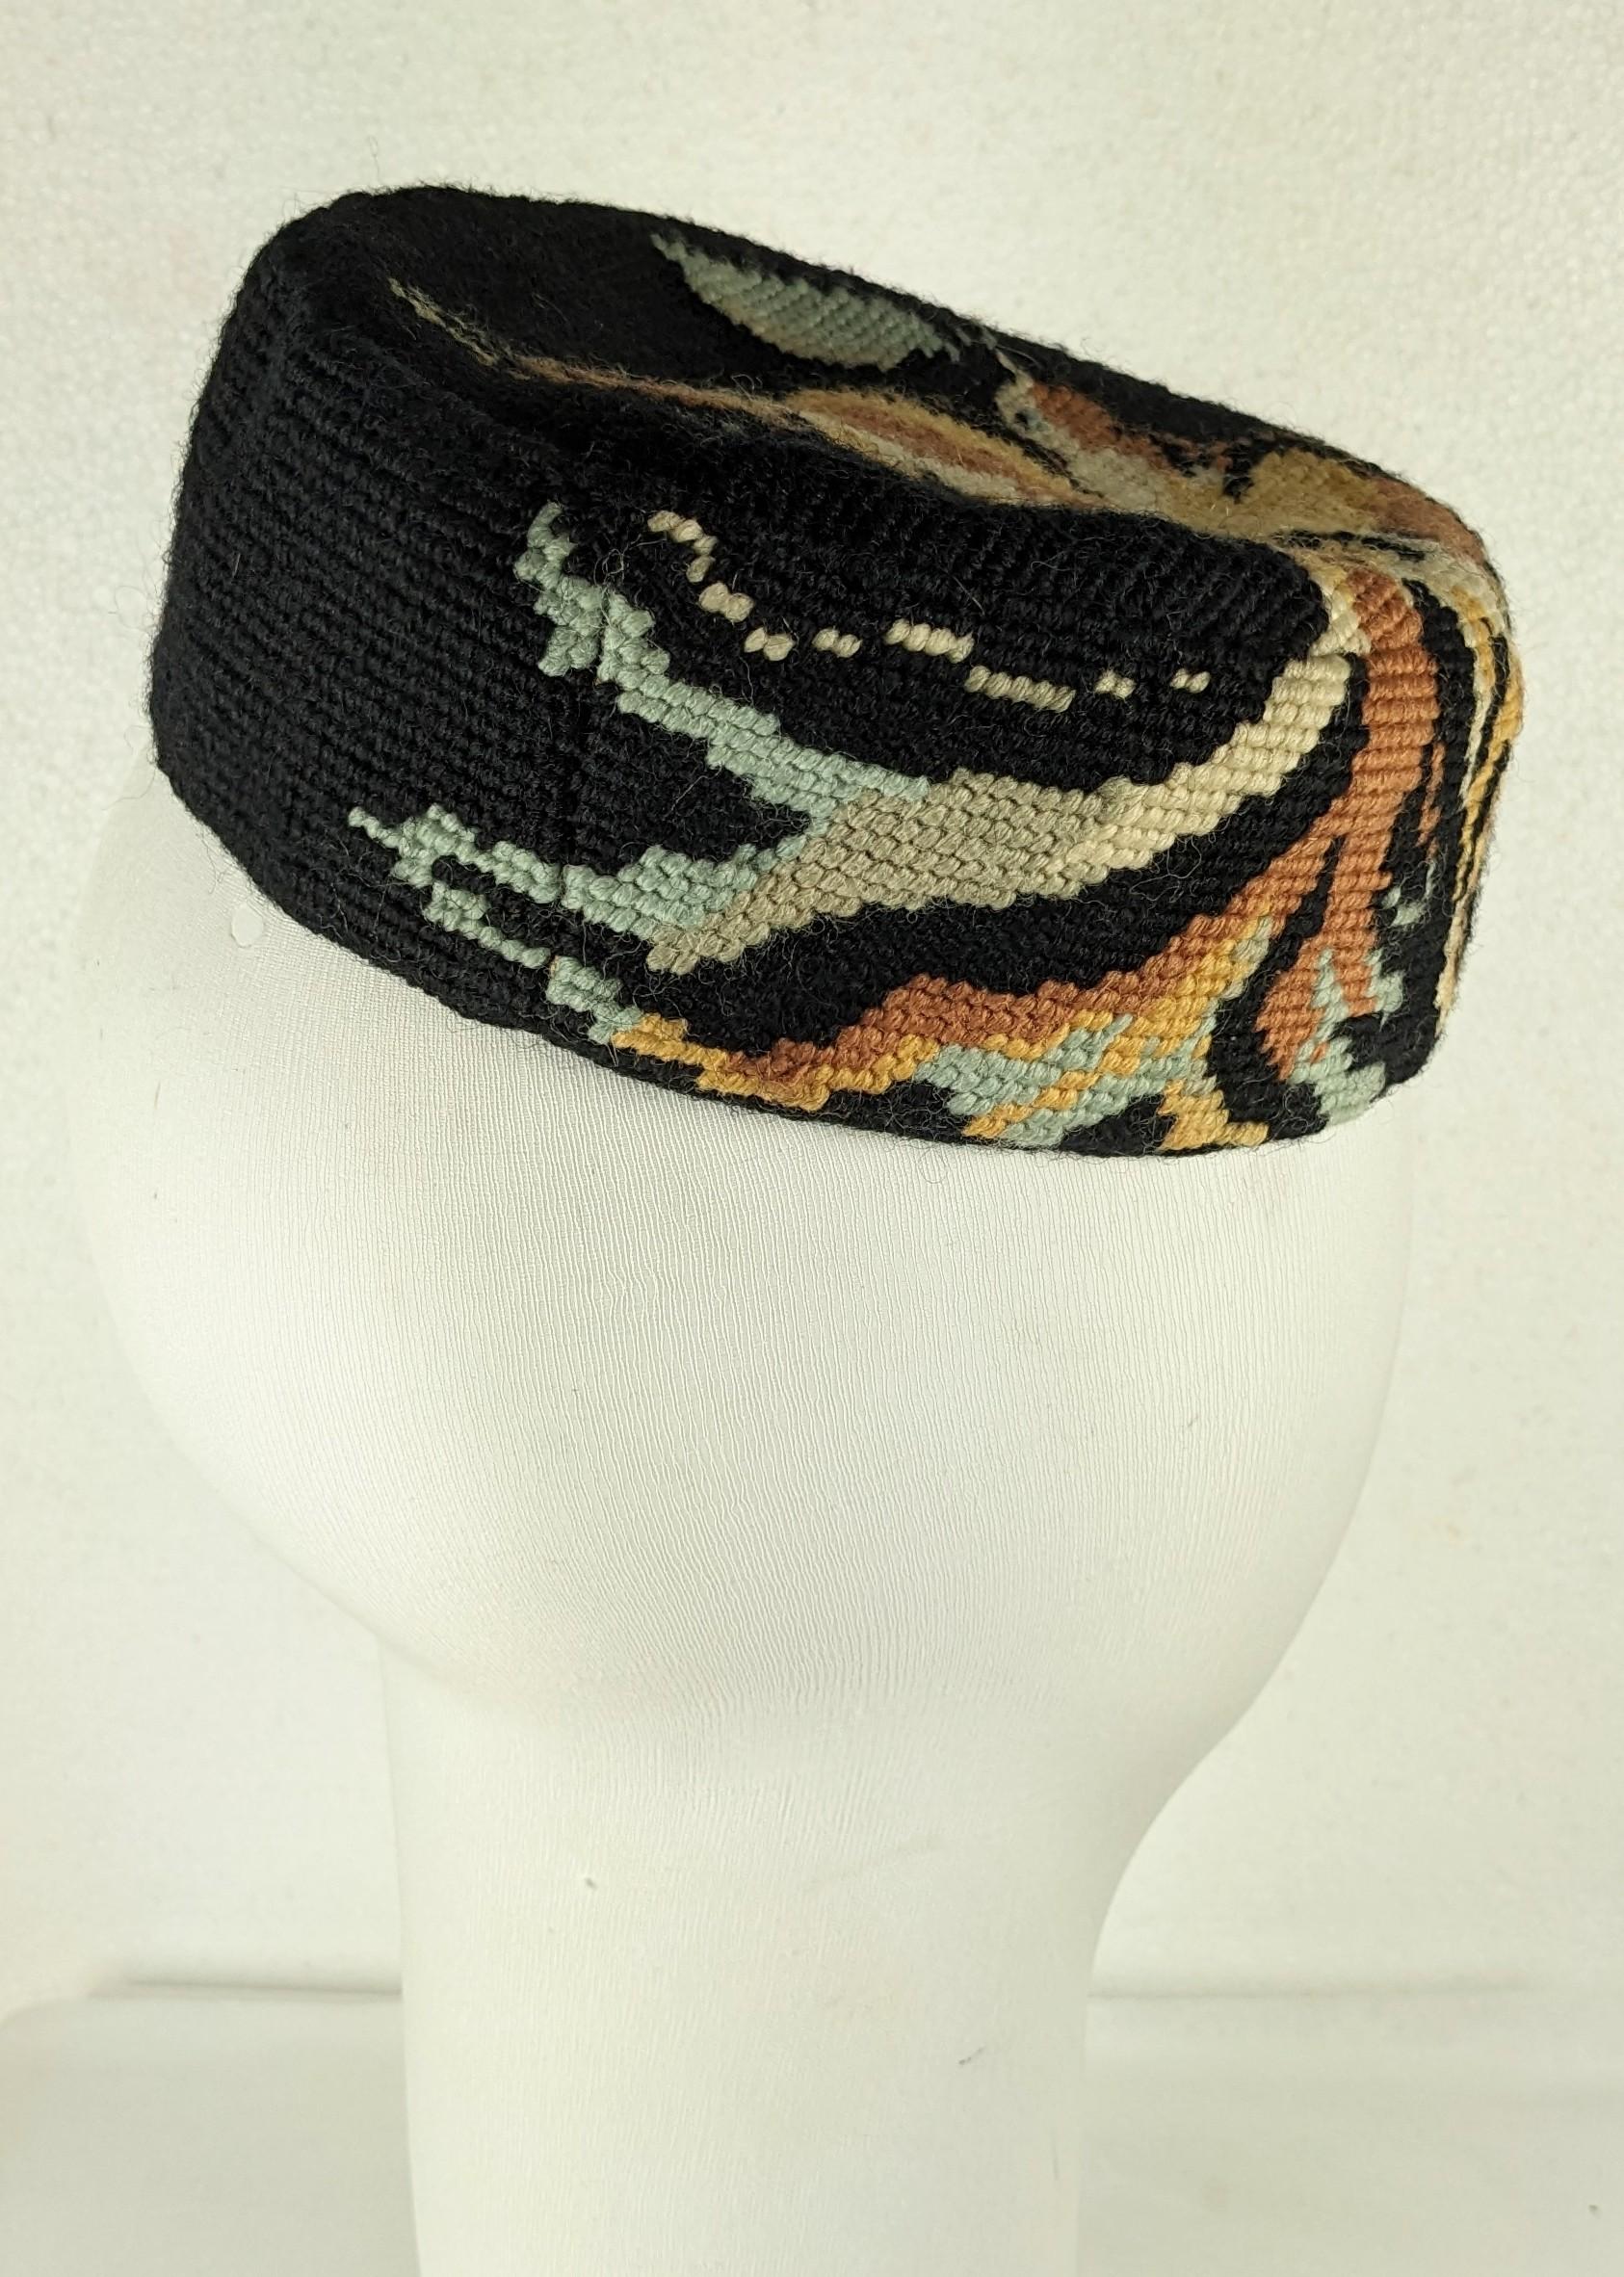 Women's Marcel Vertes Needlepoint Cross Stitch Pill Box Hat, 1940 For Sale